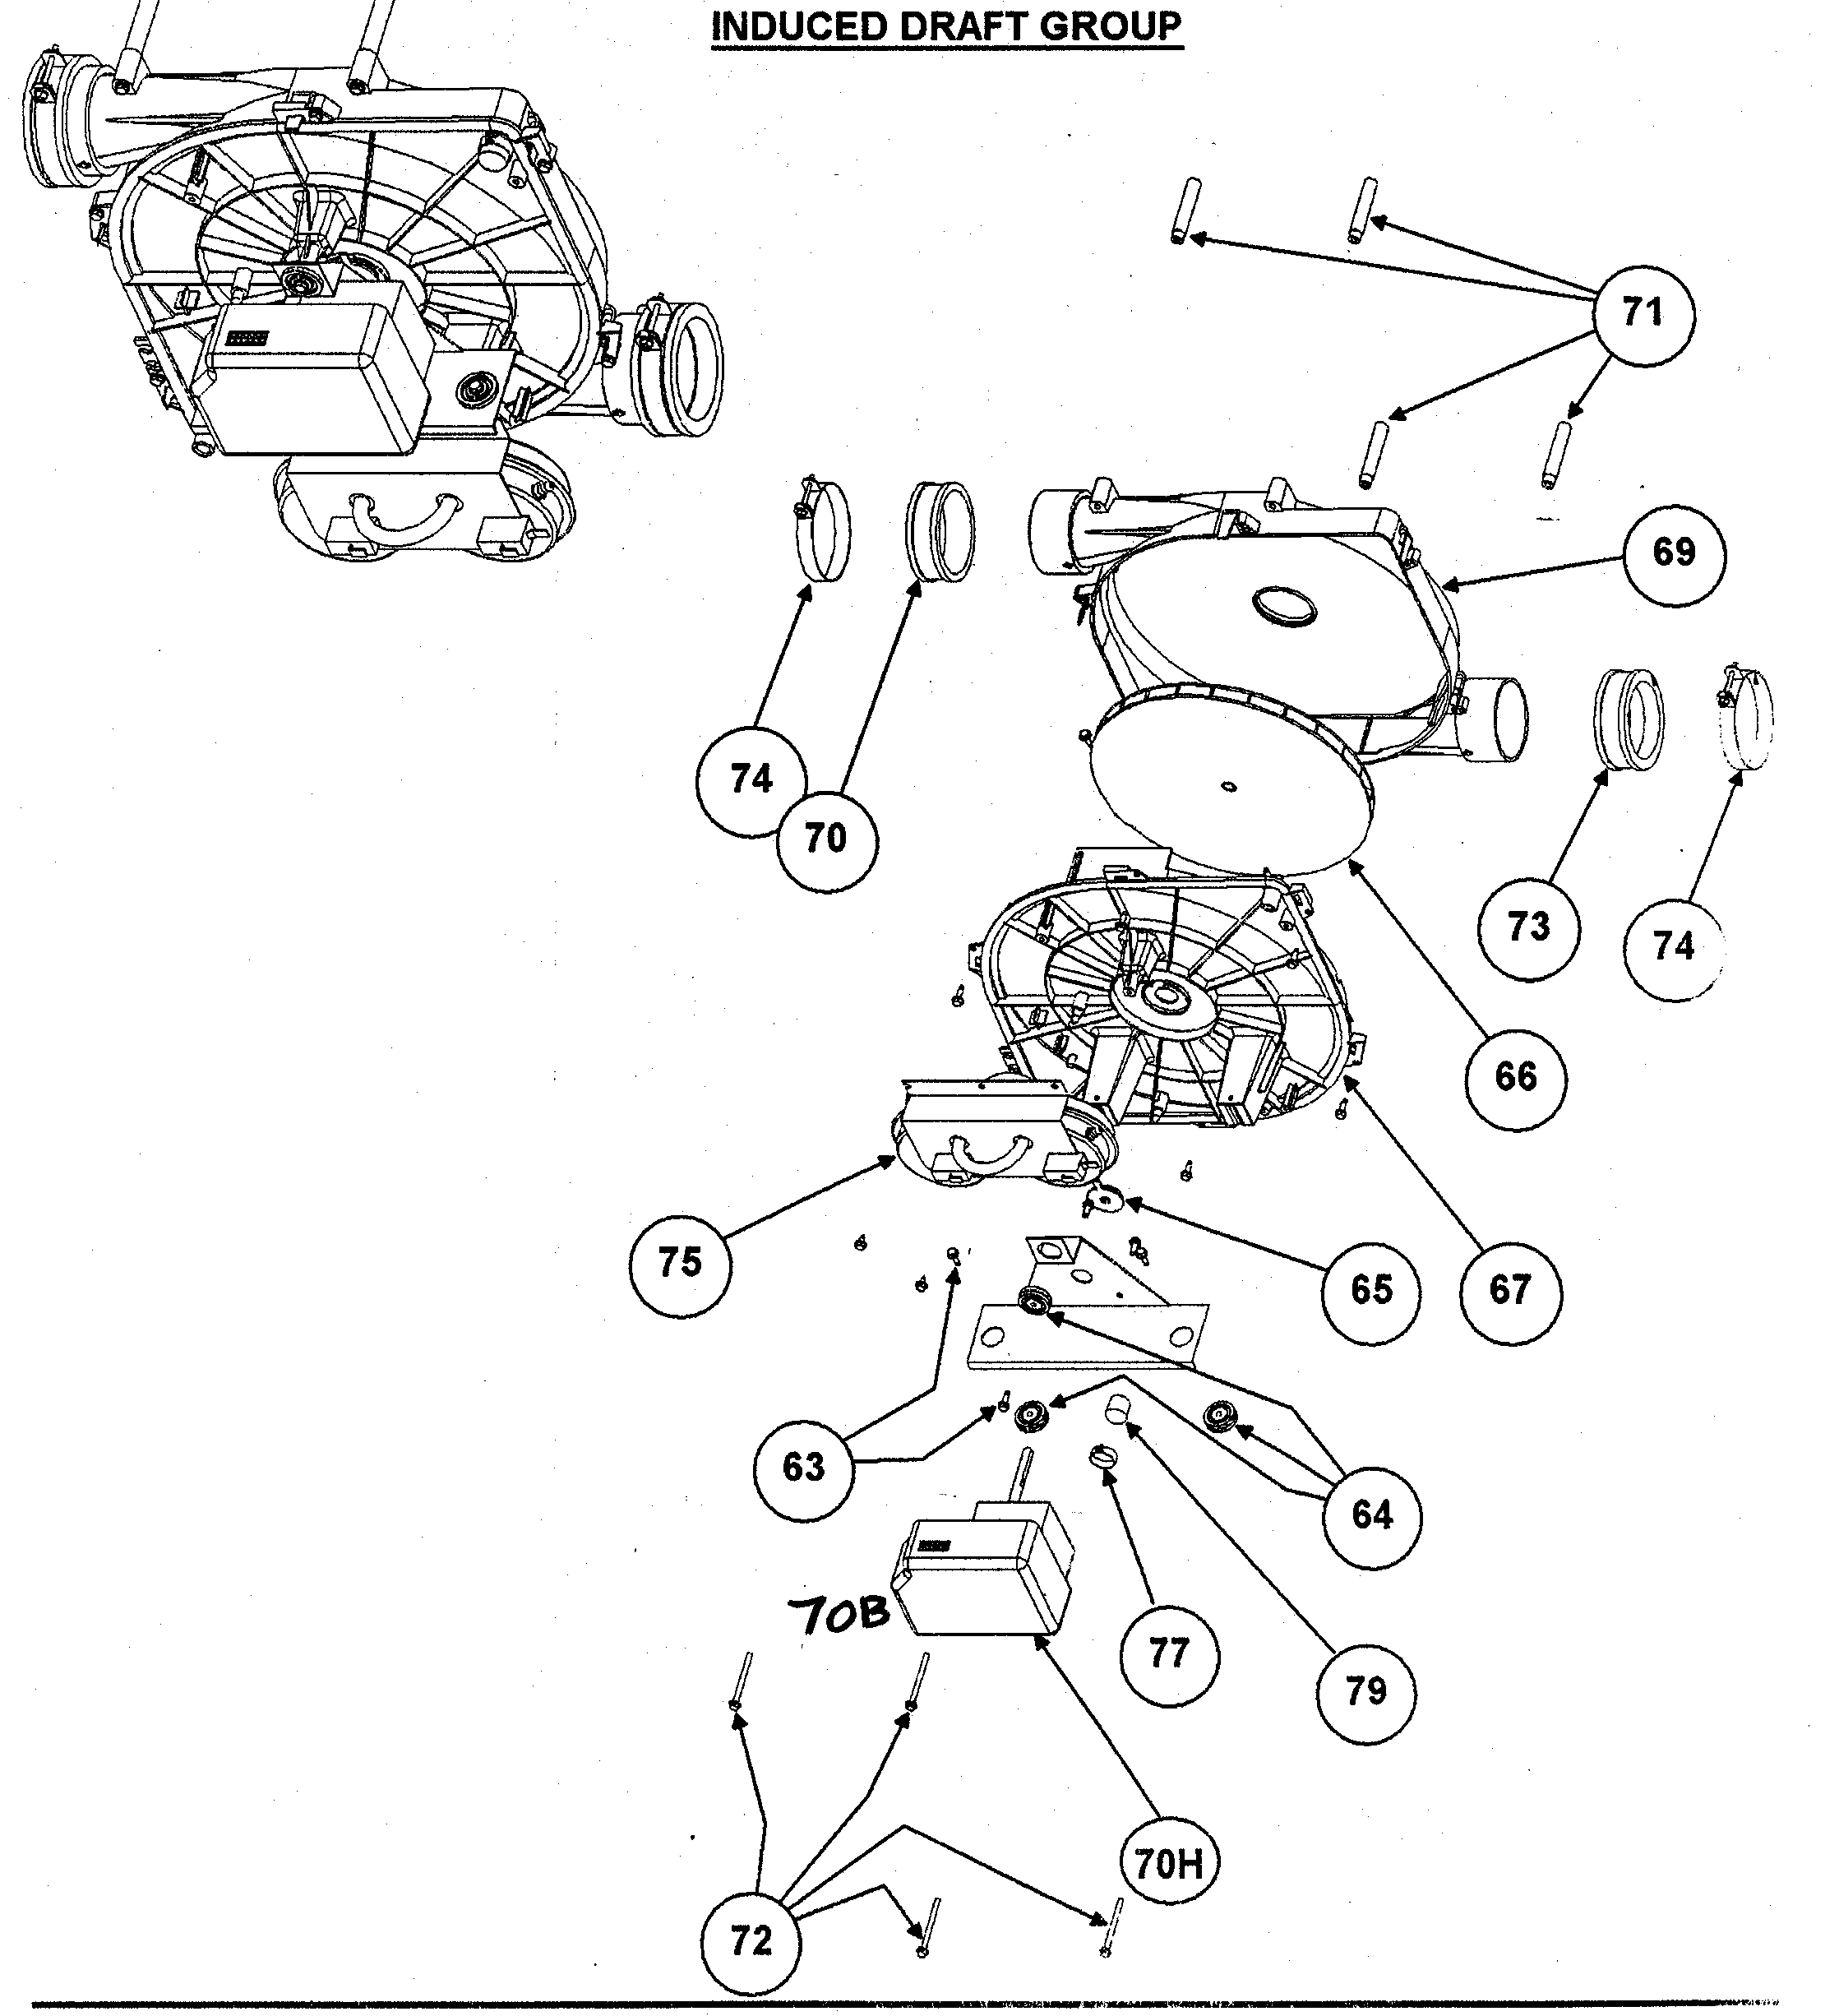 hd46mq133 wiring diagram